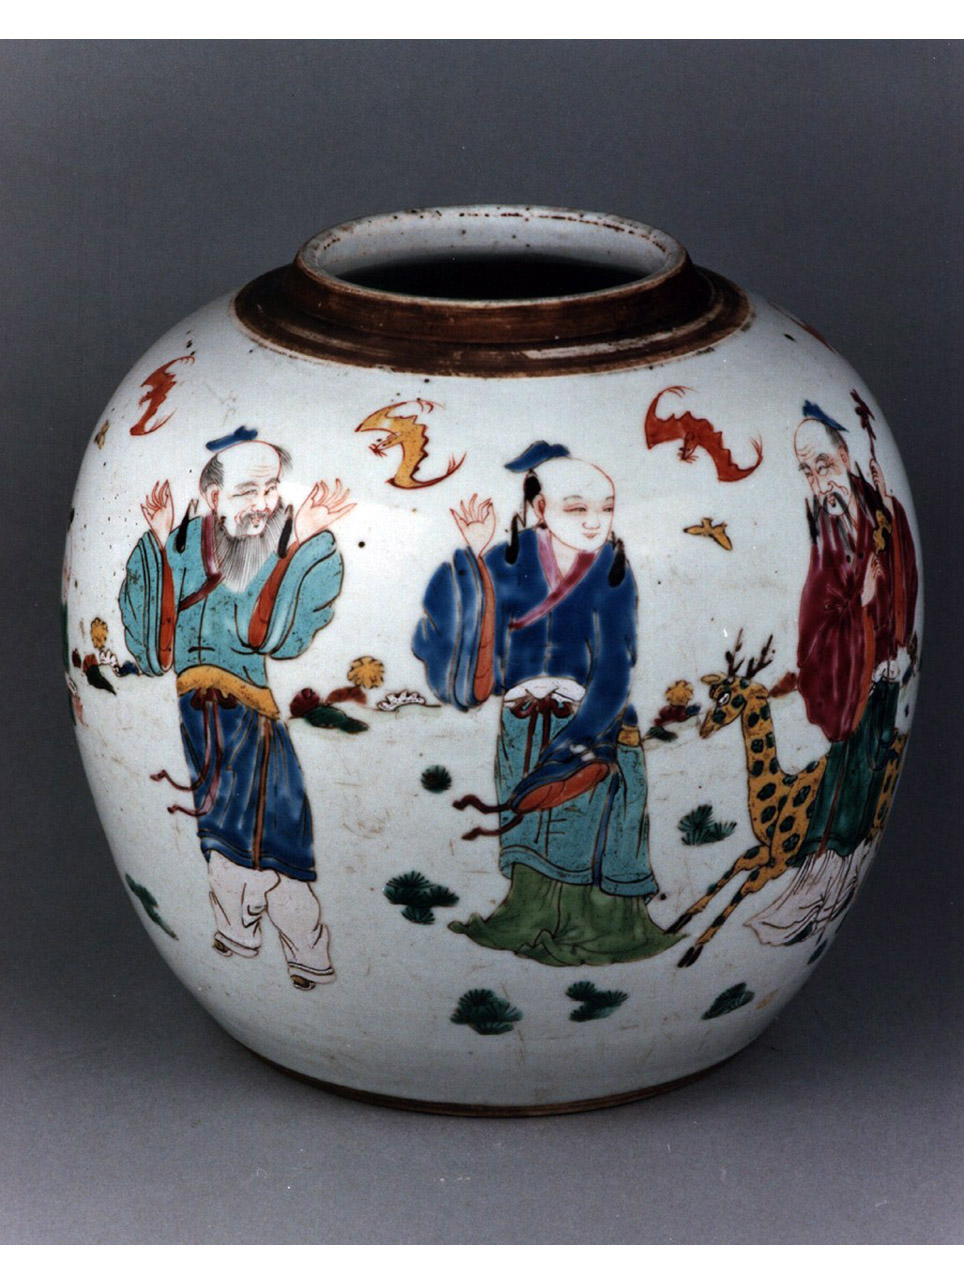 figure orientali/ motivi decorativi vegetali e animali (vaso) - manifattura cinese (sec. XVIII)